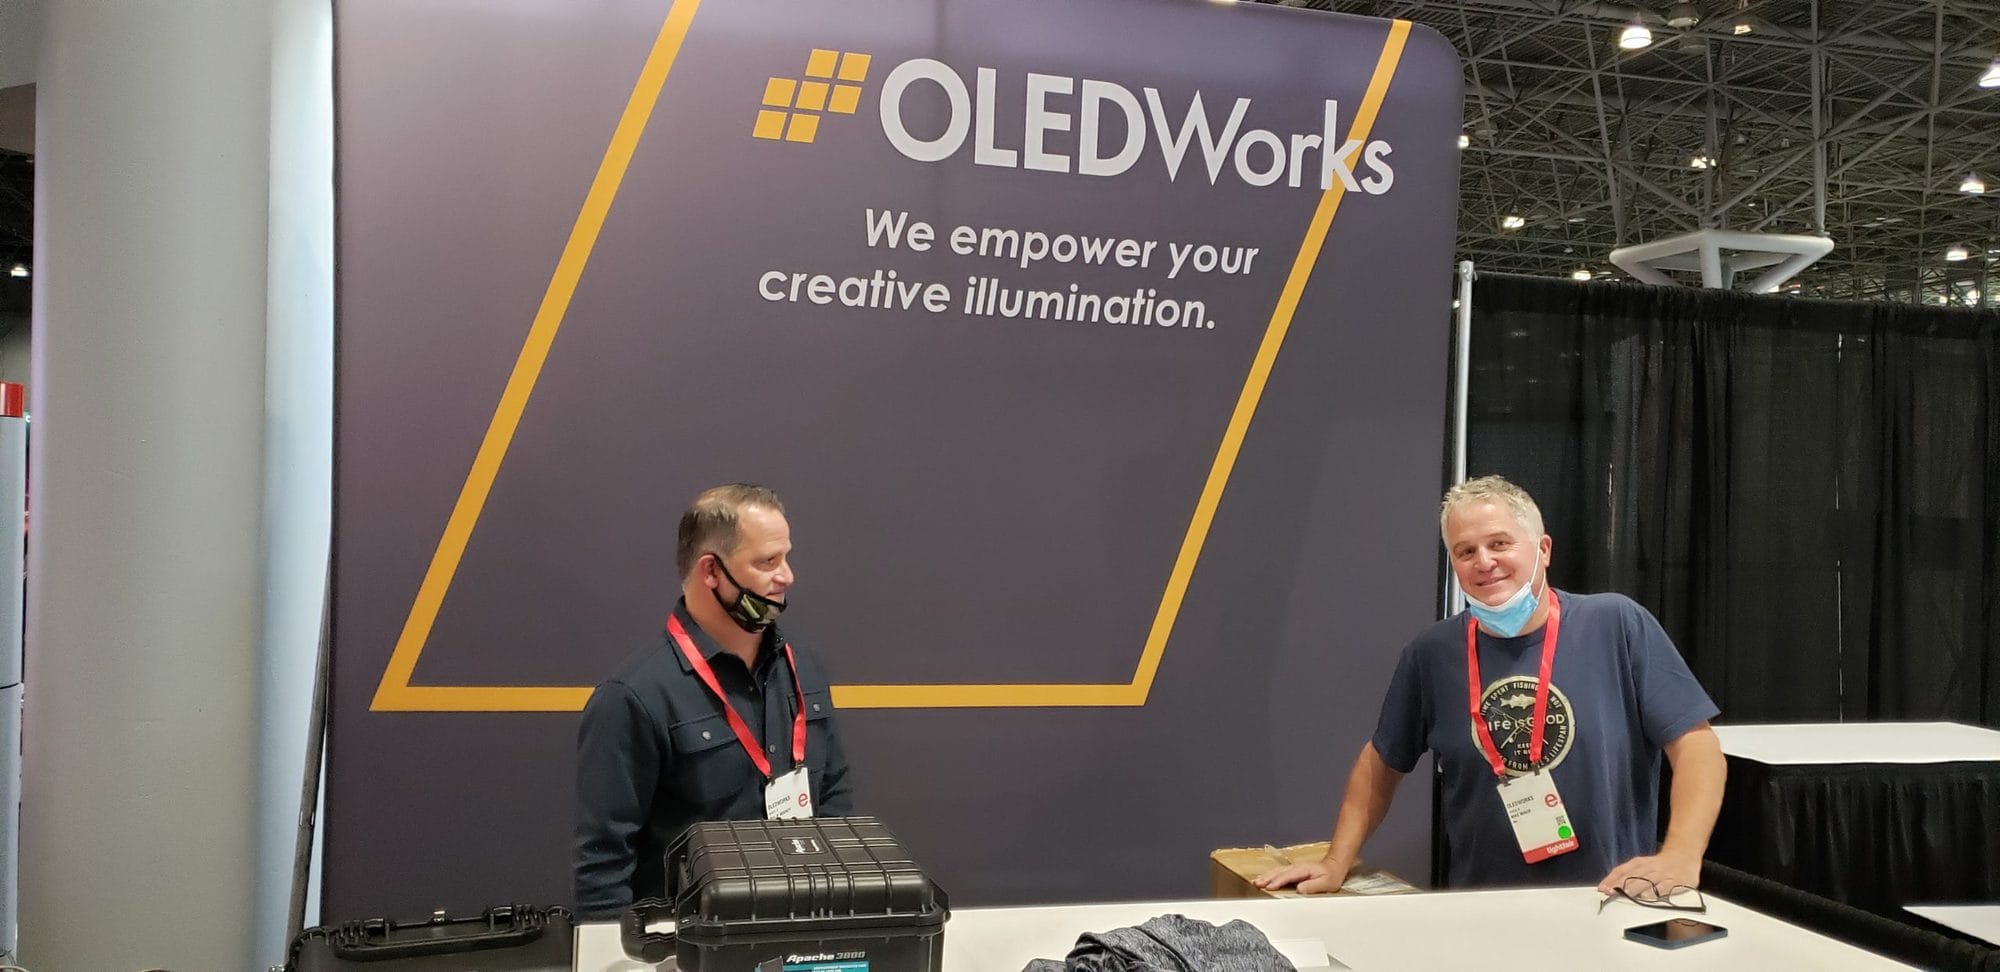 OLEDWorks team setting up booth at LightFair